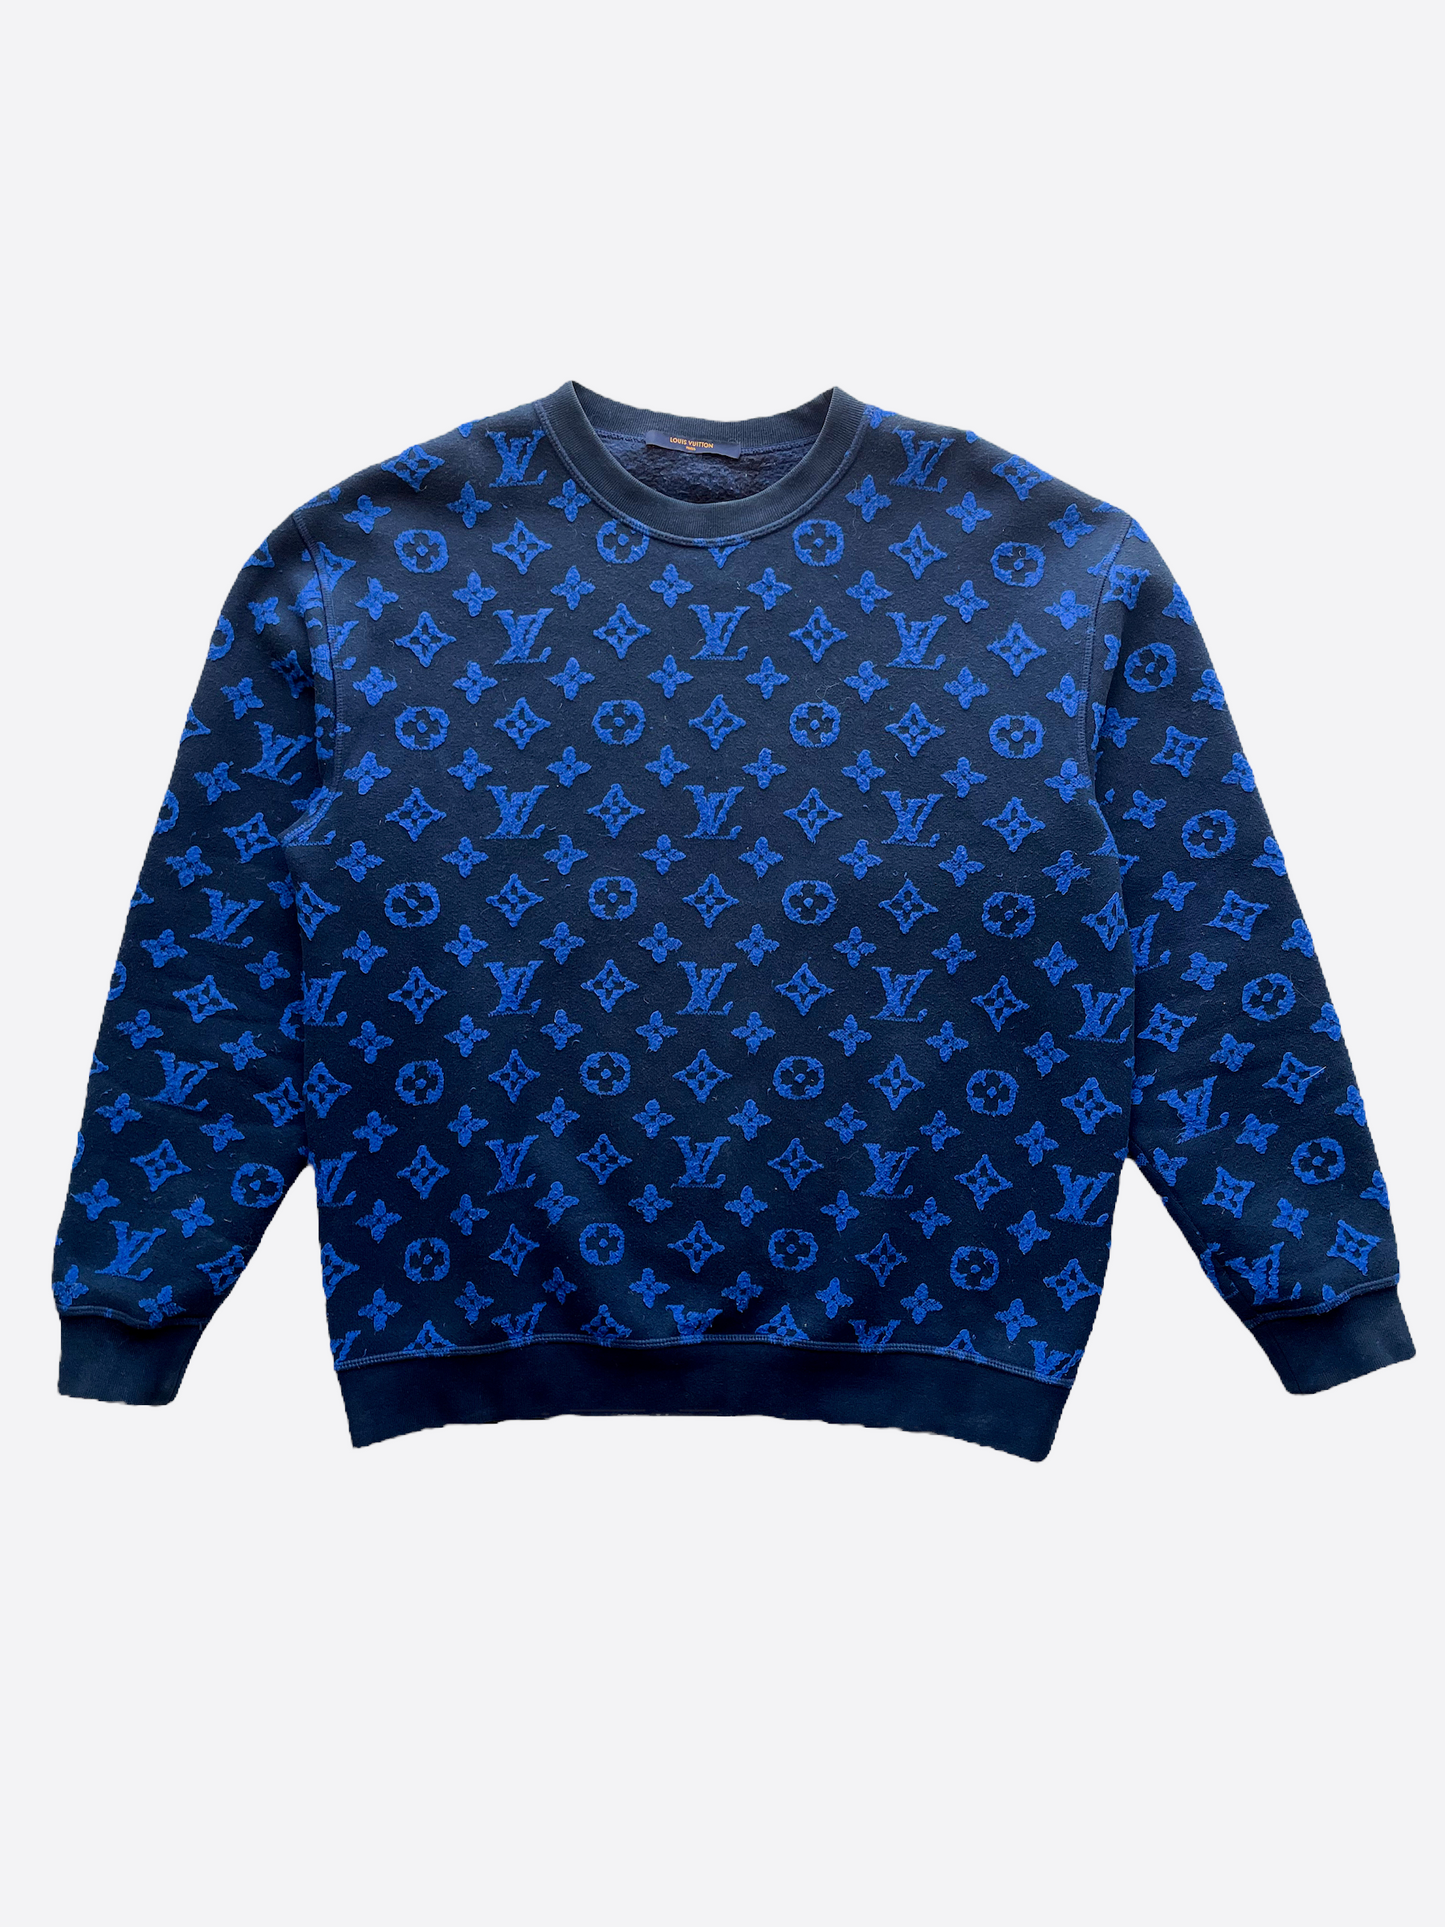 Louis Vuitton 2021 Monogram Jacquard Sweatshirt - Blue Sweatshirts